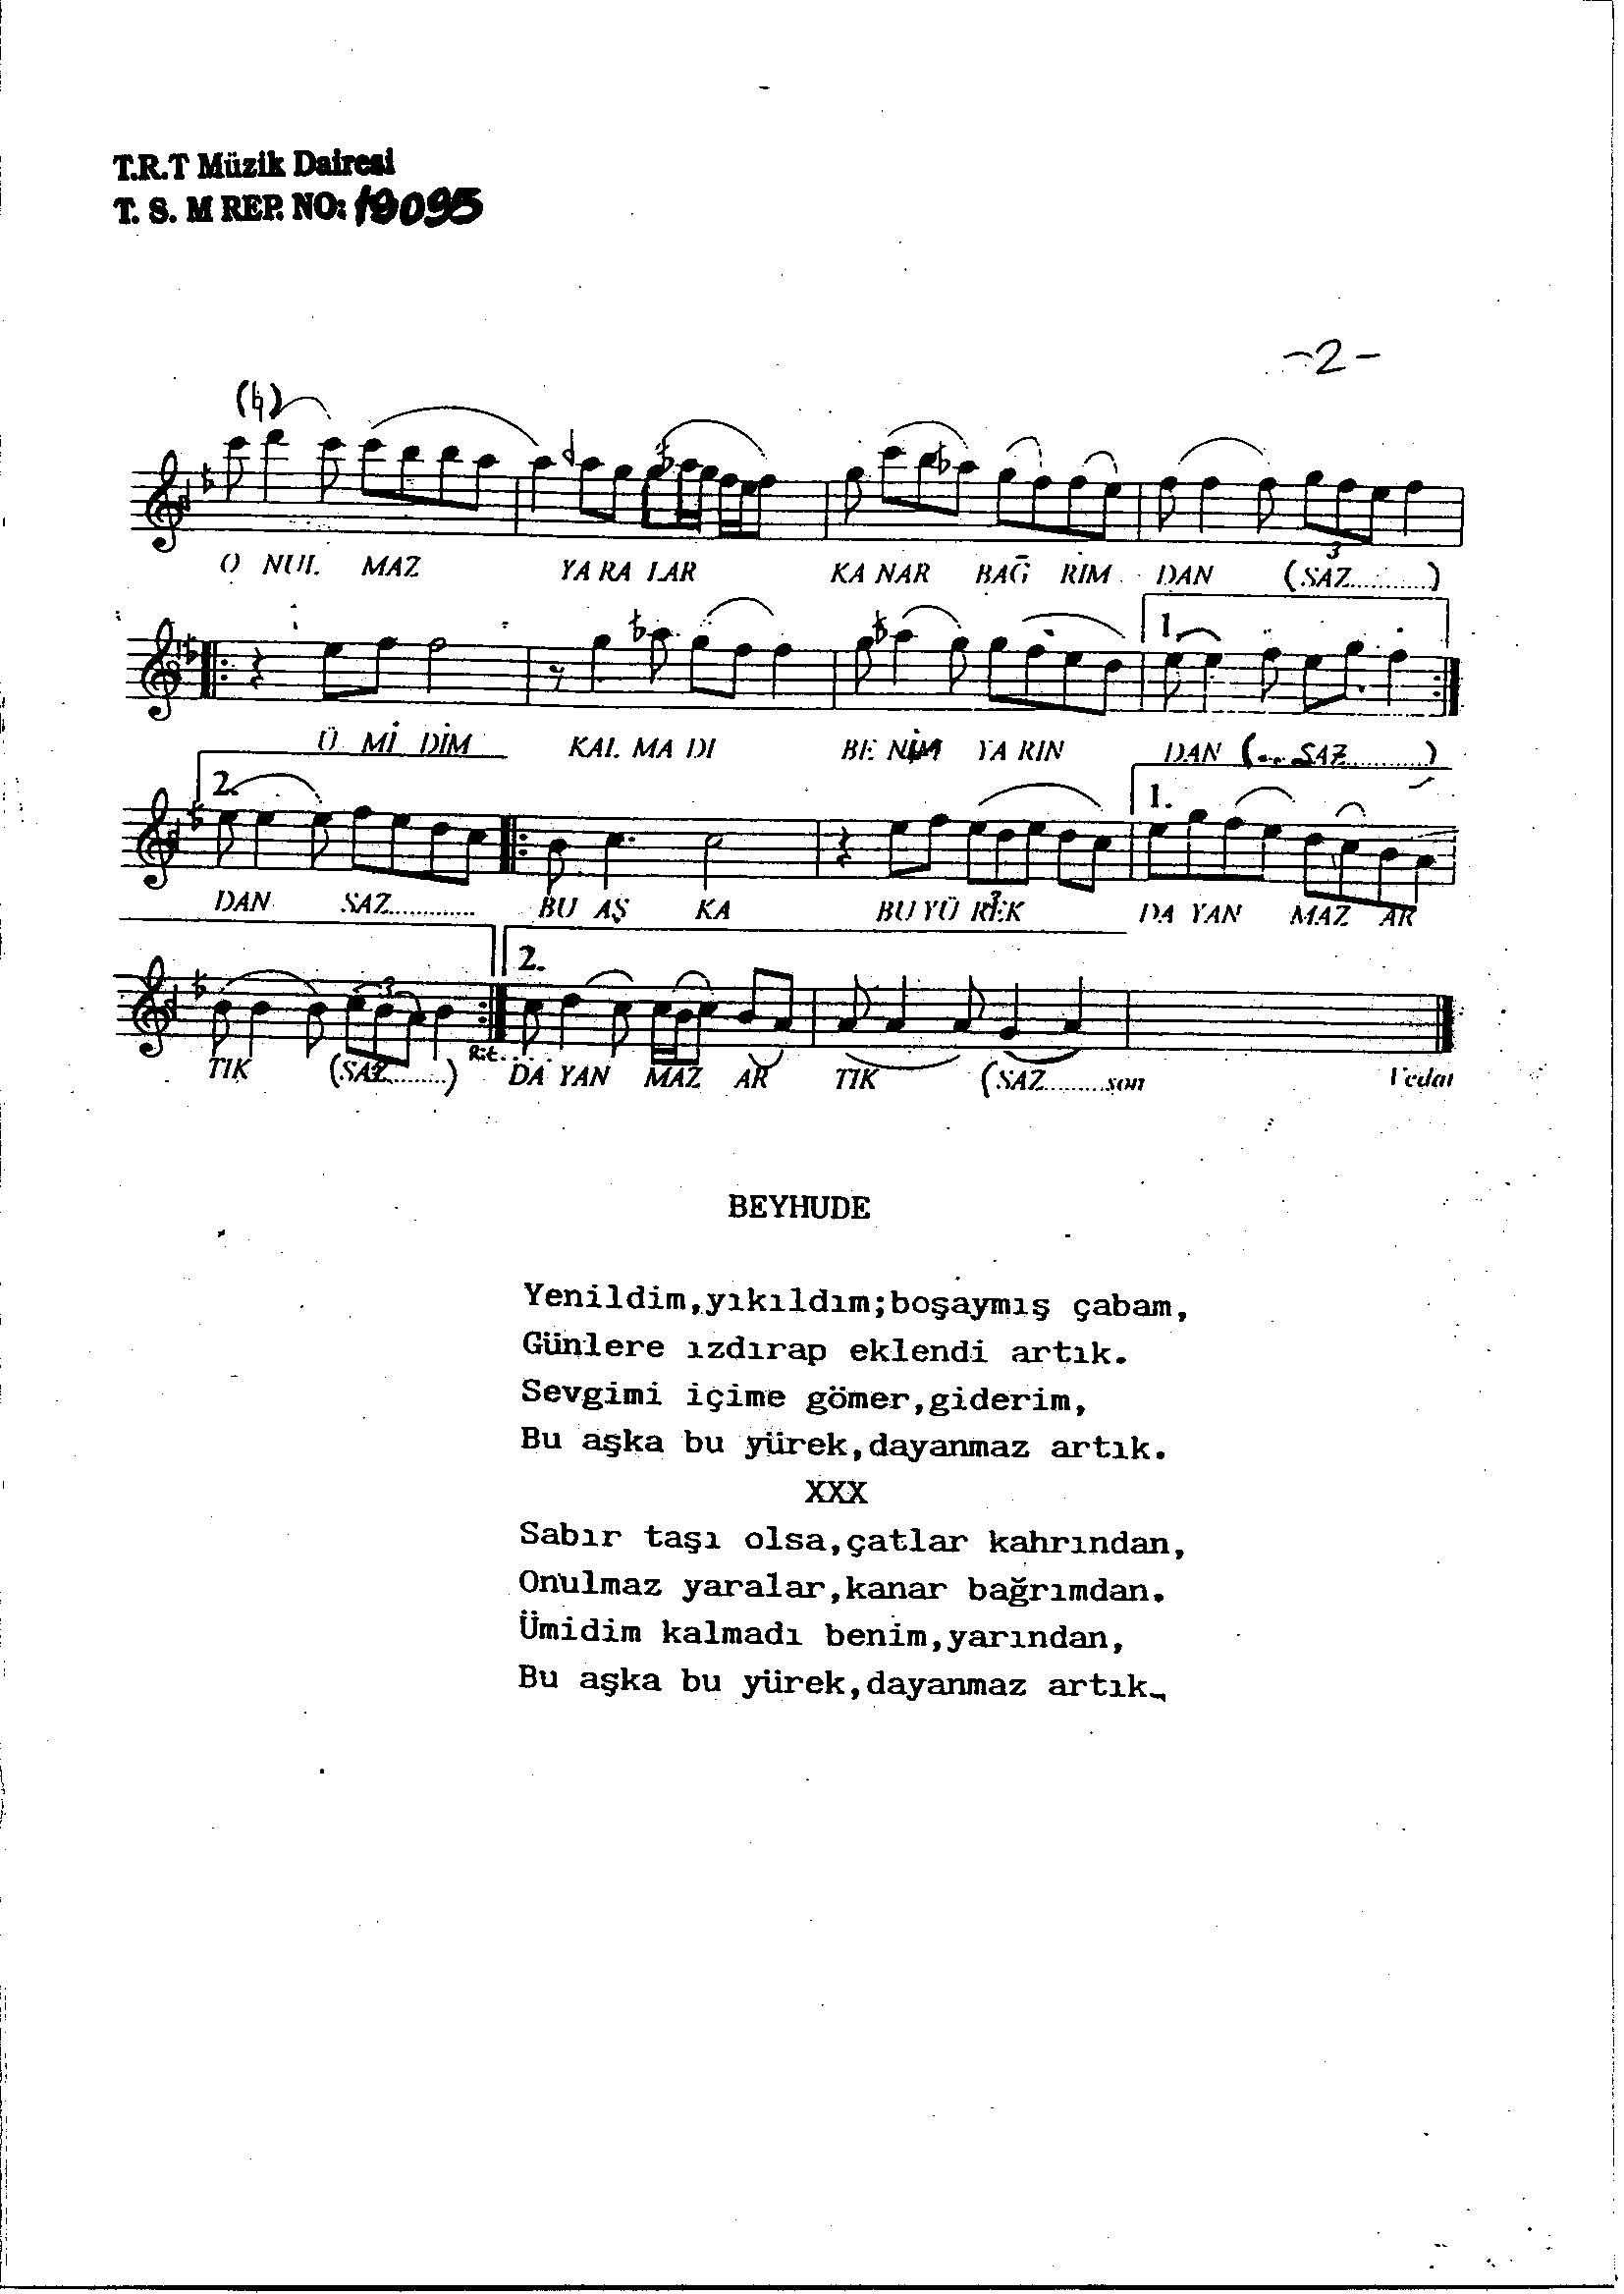 Sabâ - Şarkı - A.Atilla Sütşurup - Sayfa 2